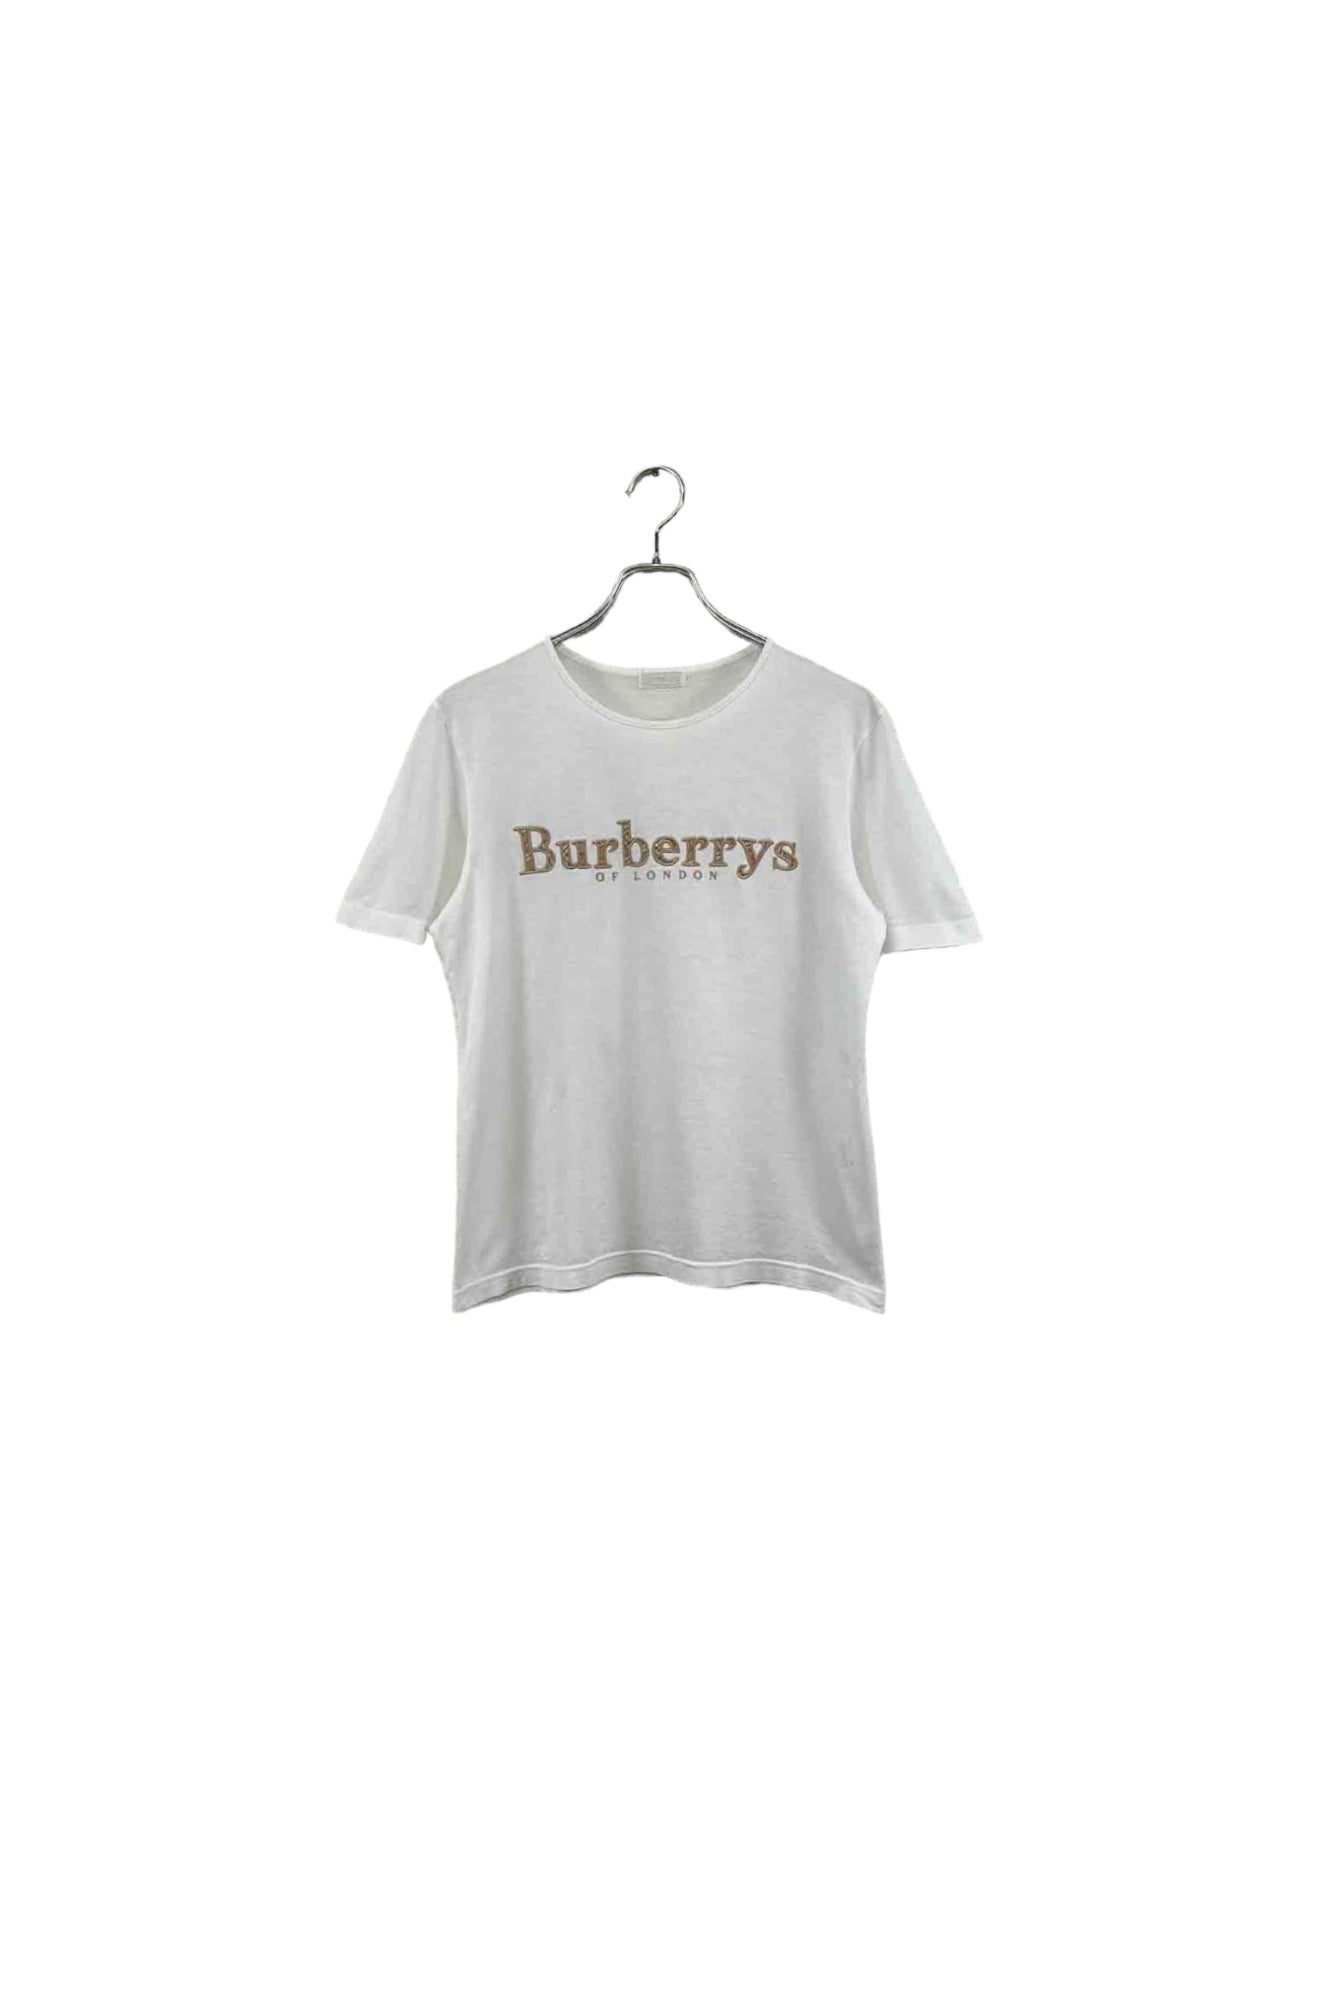 Burberry's white T-shirt